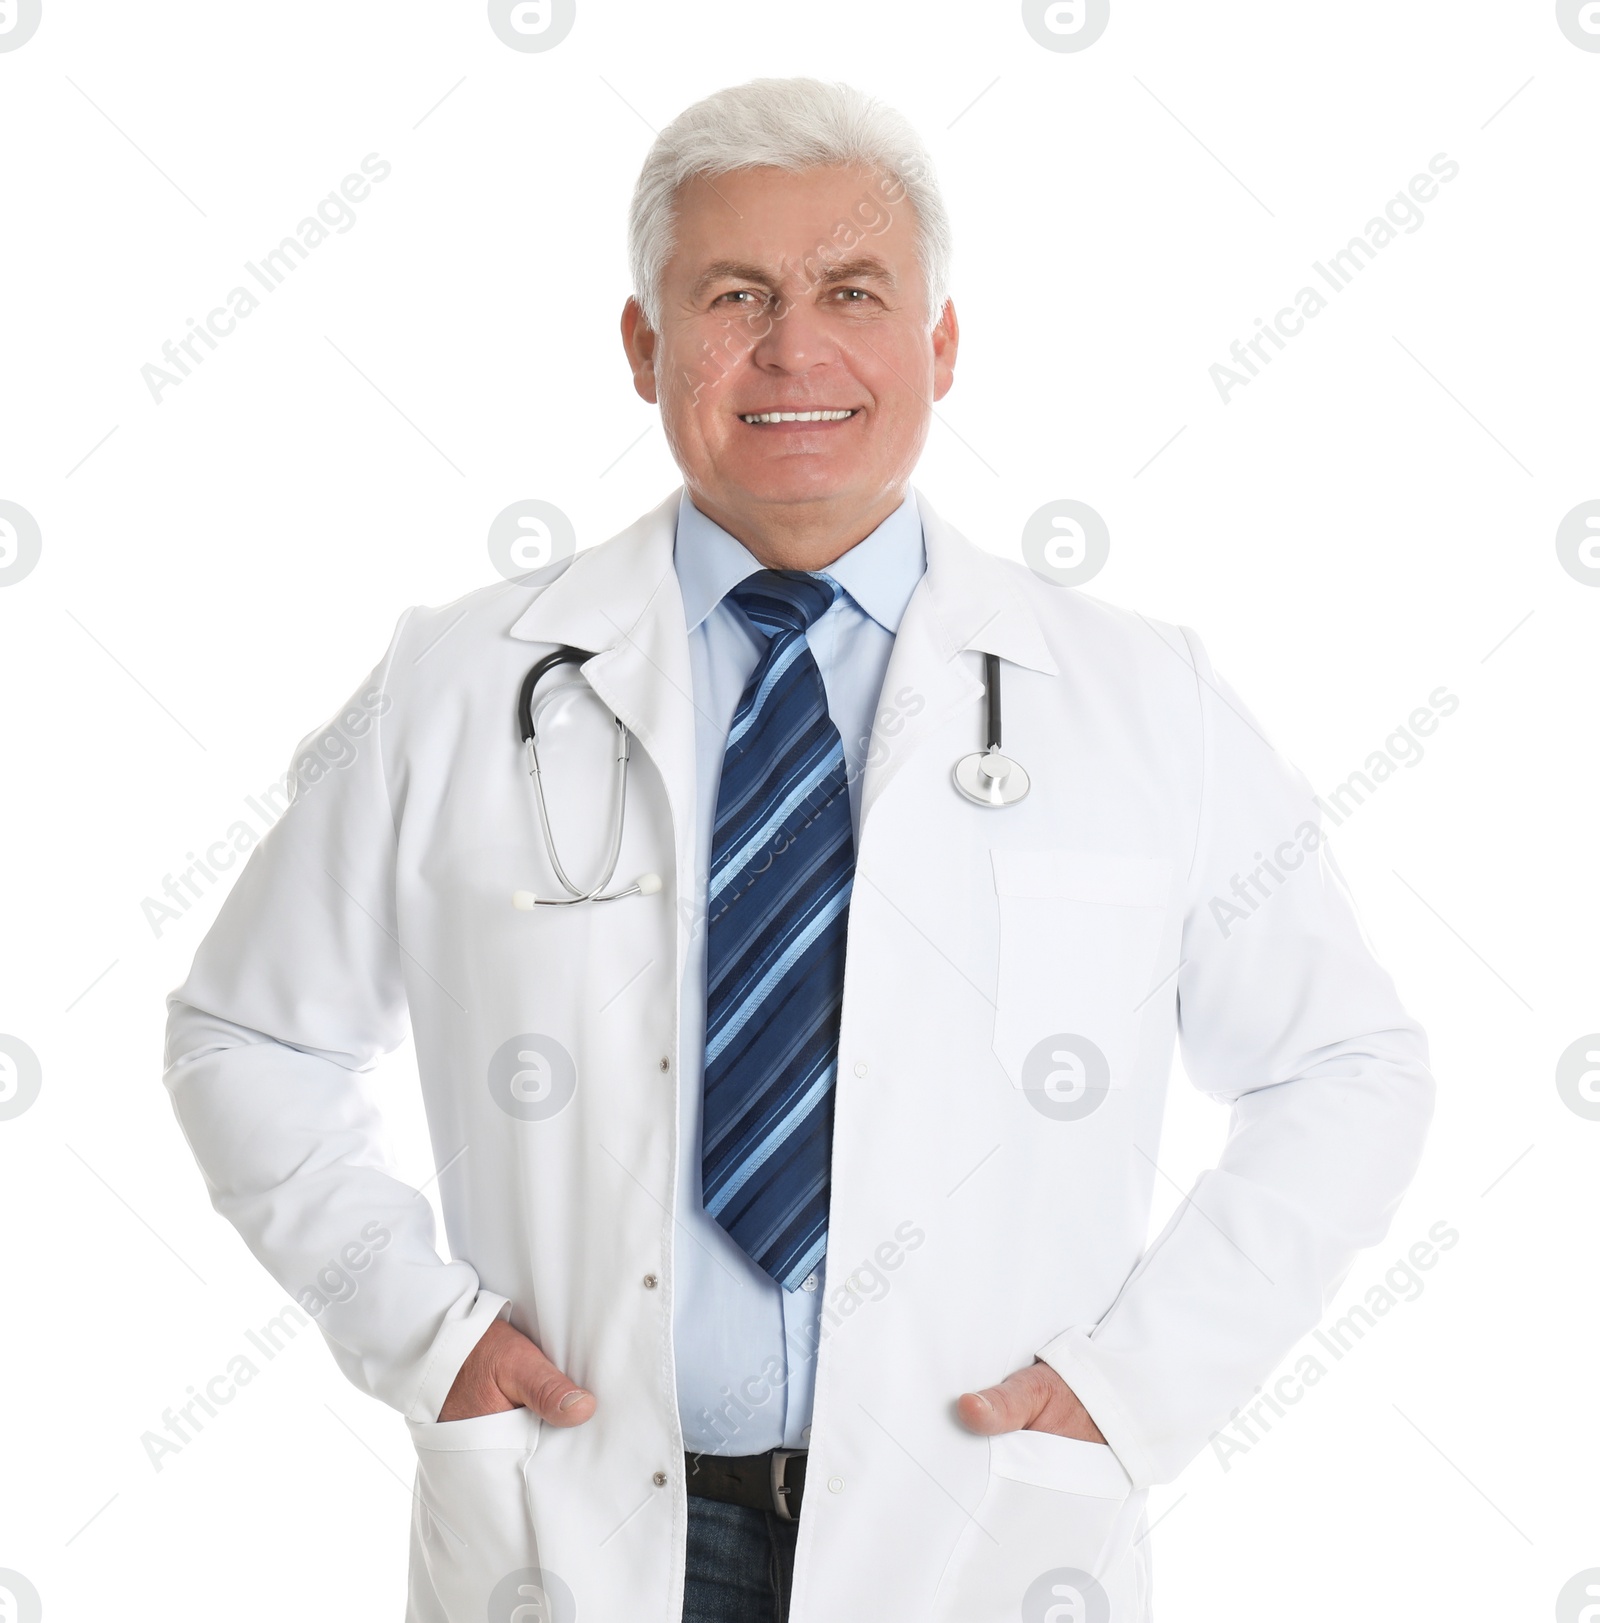 Photo of Senior doctor with stethoscope on white background